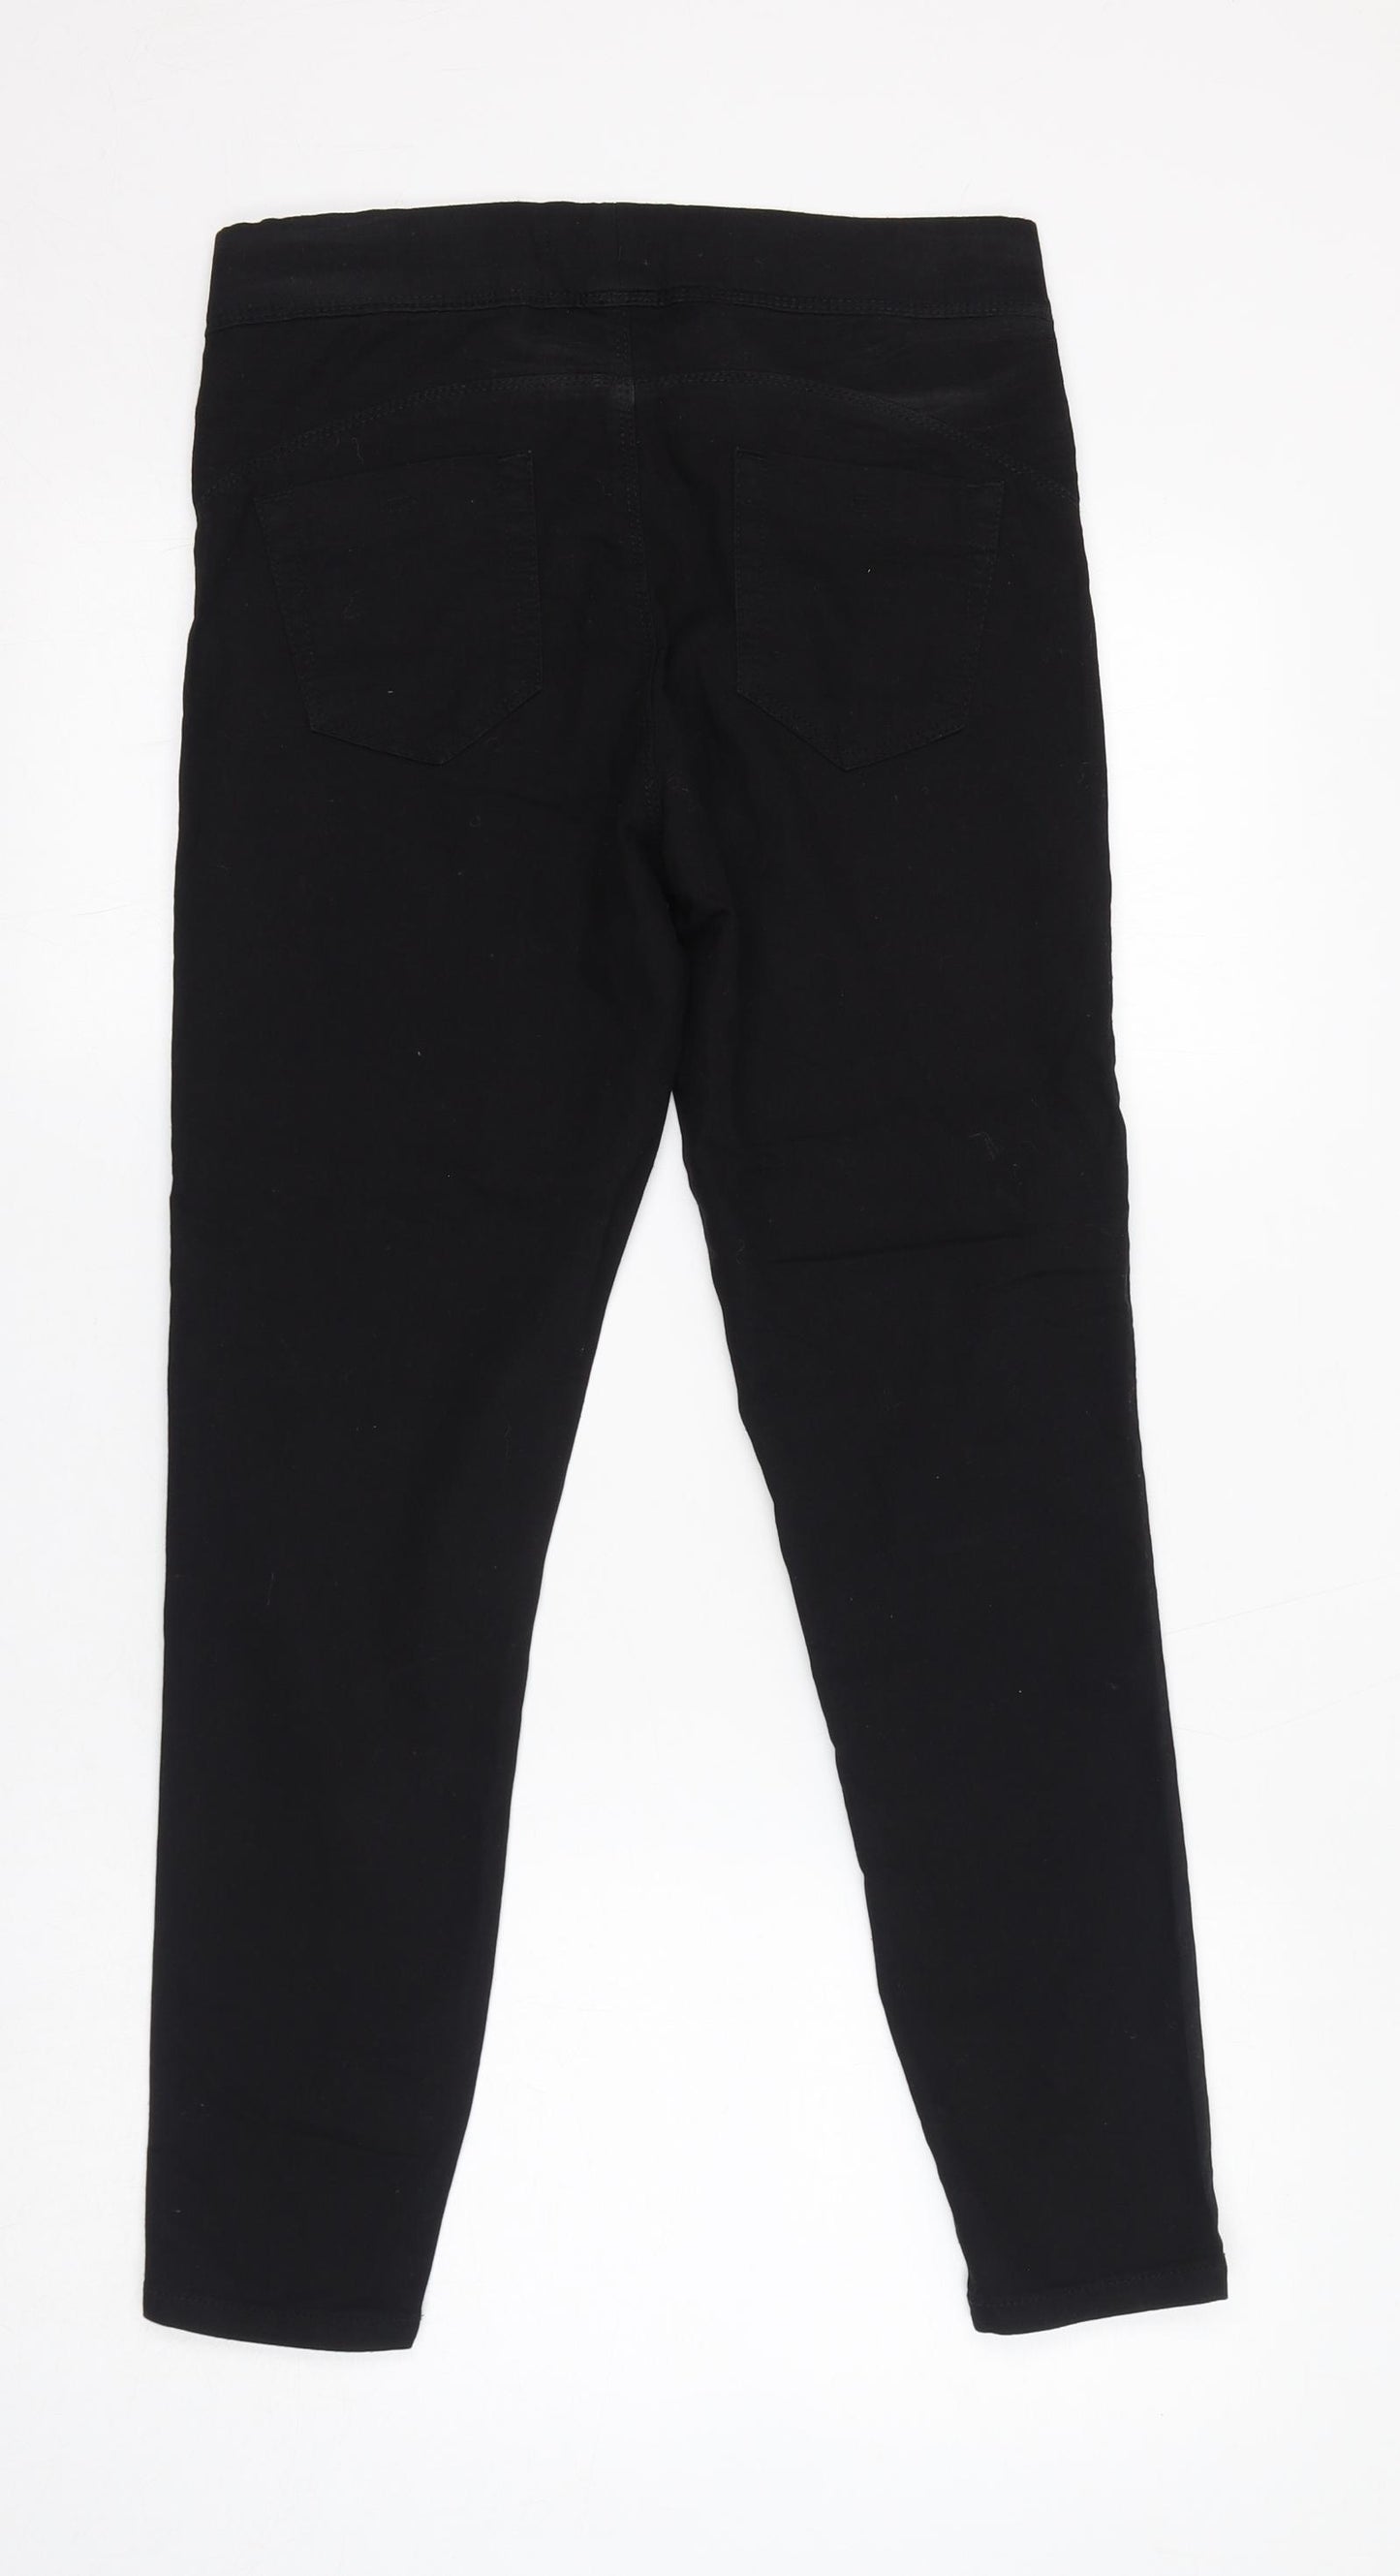 Denim & Co. Womens Black Cotton Jegging Jeans Size 10 L27 in Regular